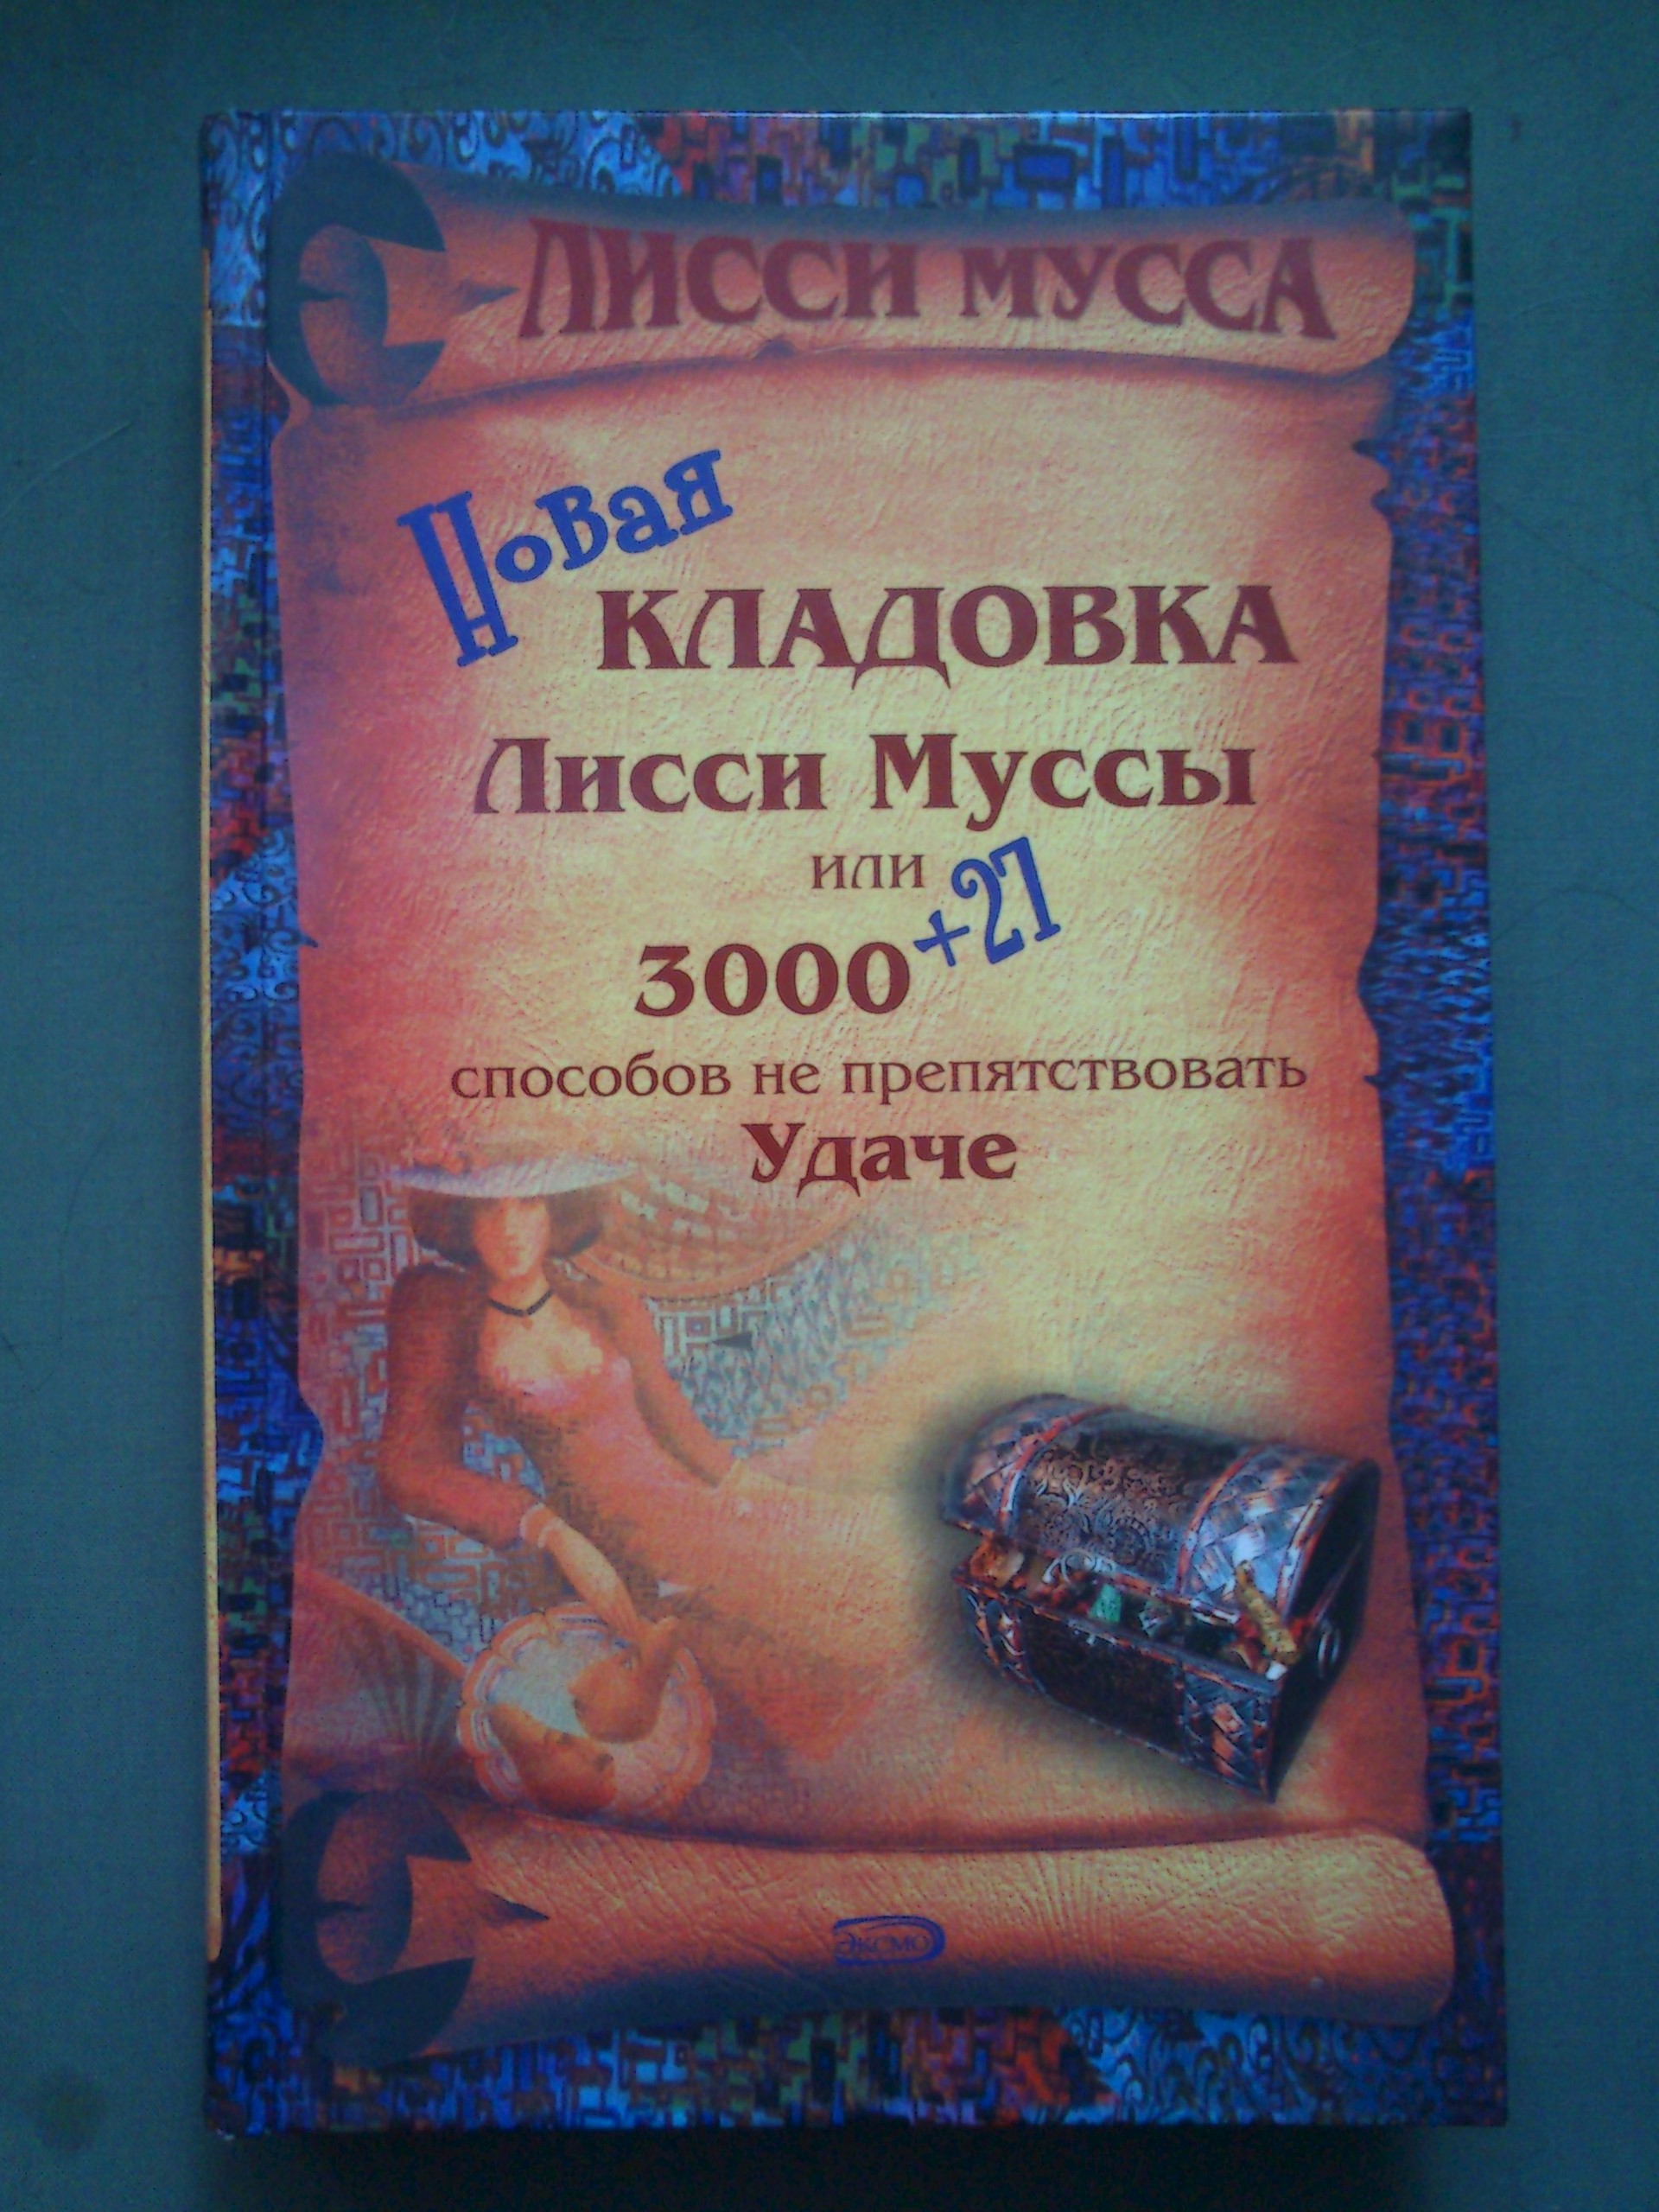 http://izhevsk.ru/forums/icons/forum_pictures/010520/10520890.jpg